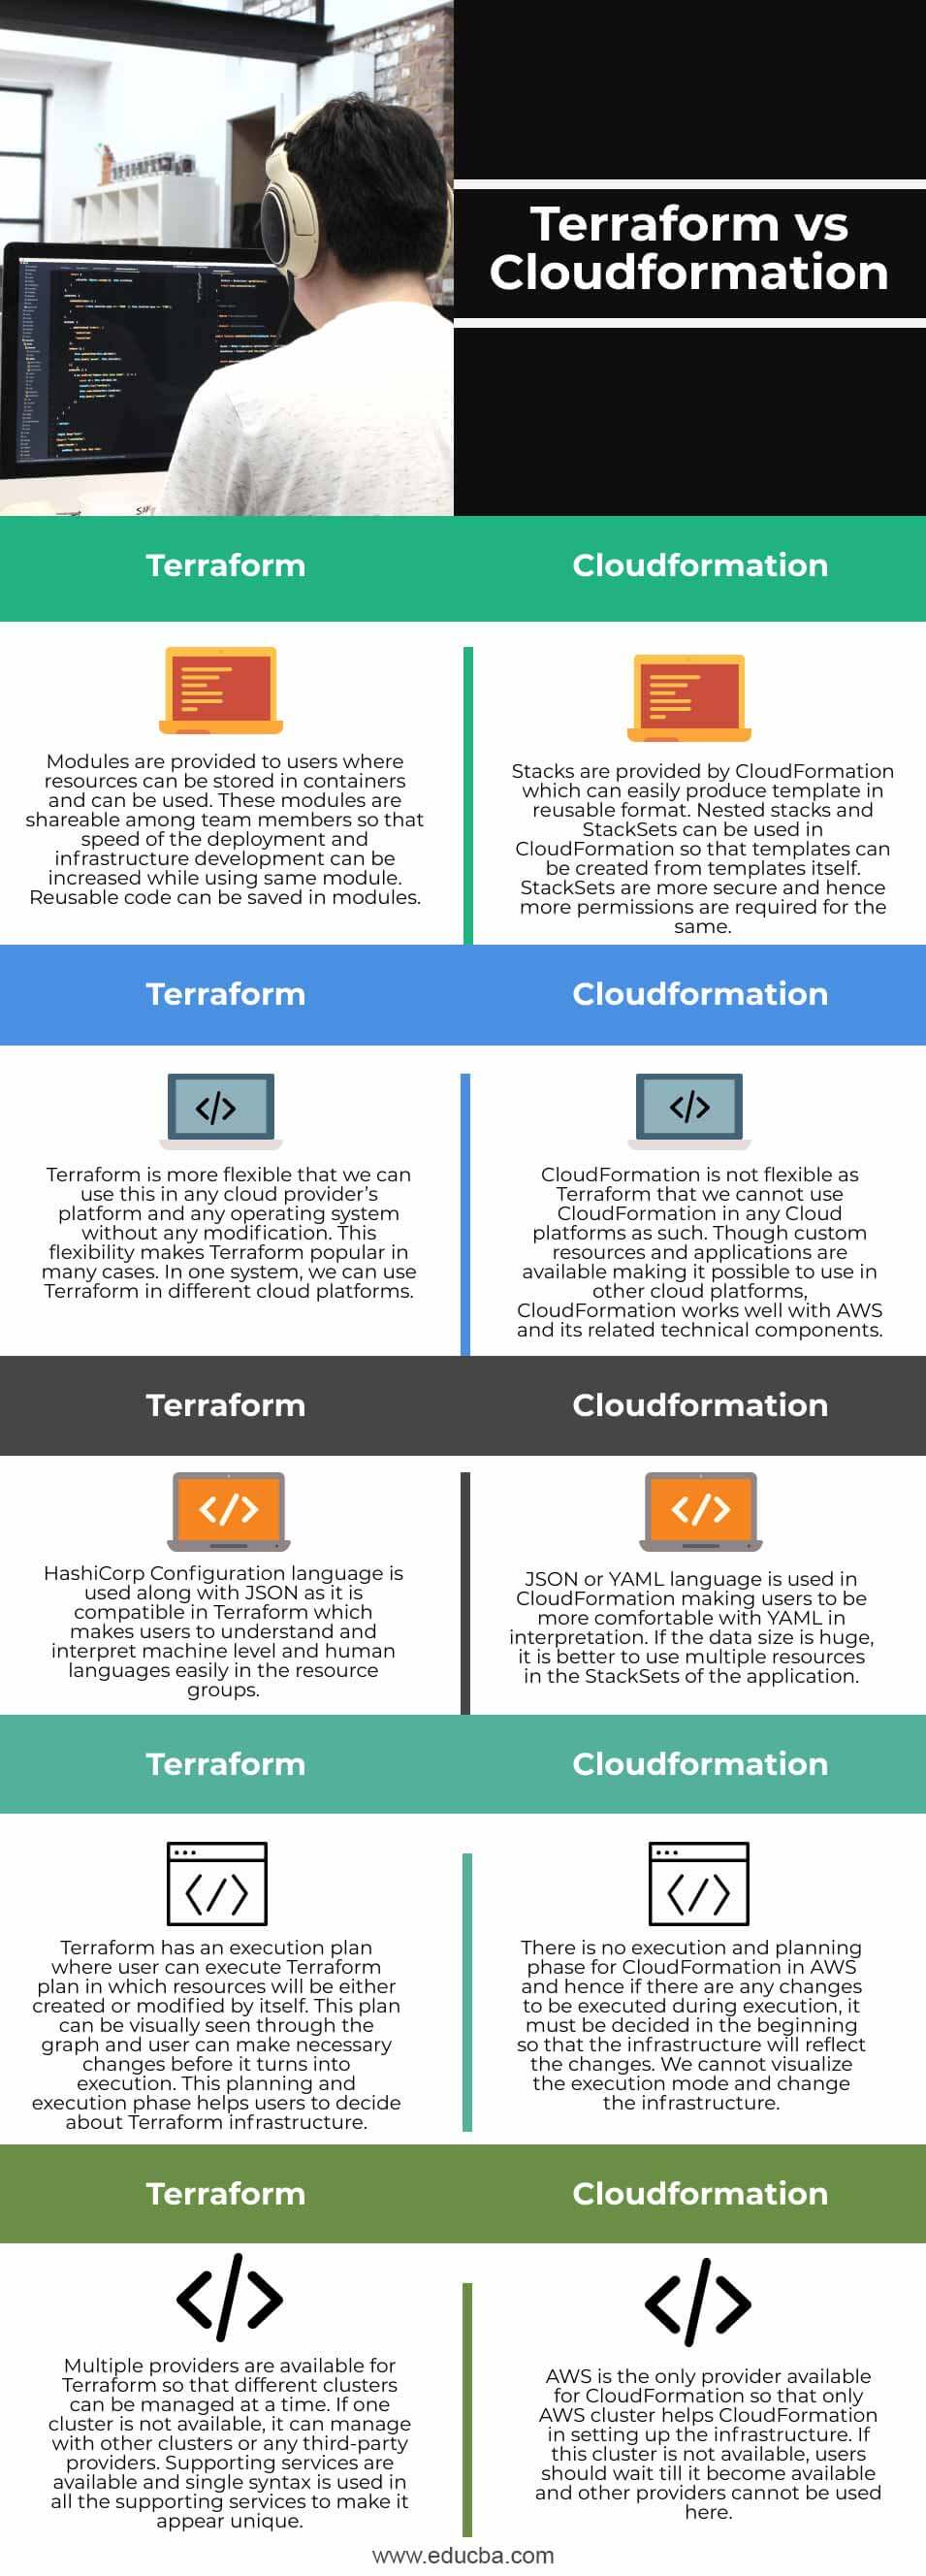 Terraform-vs-Cloudformation-info